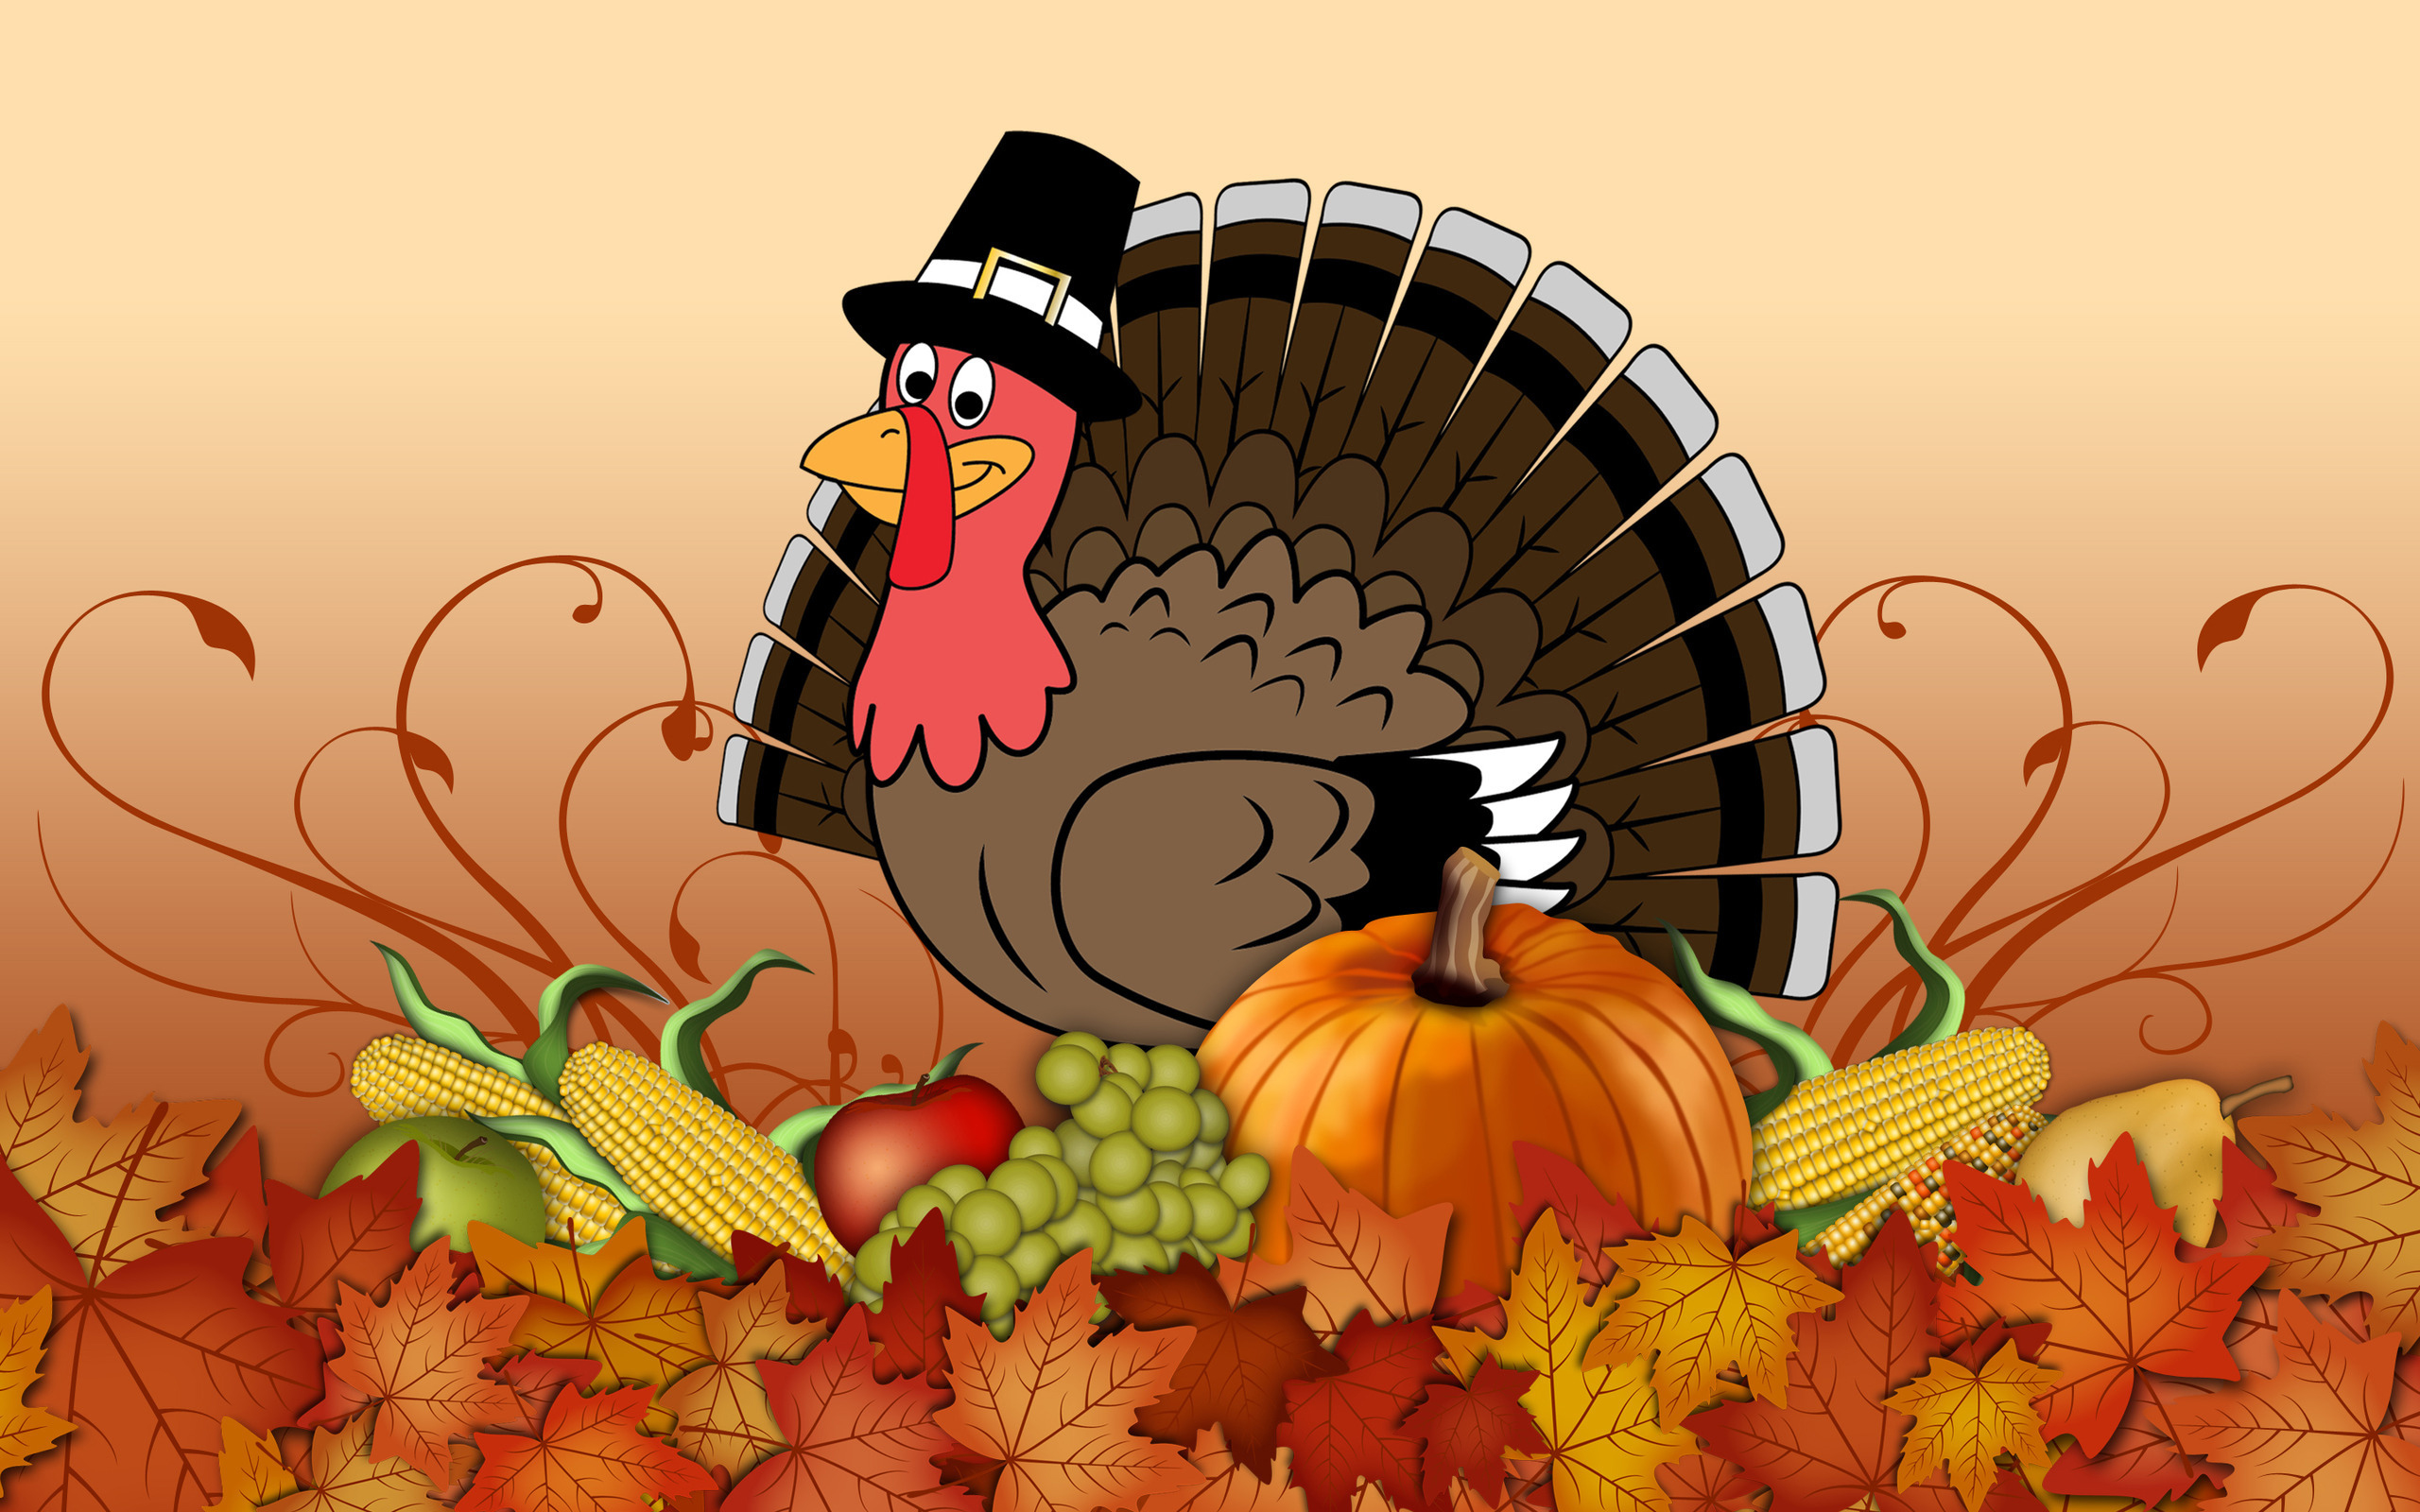 Thanksgiving HD Wallpaper Background Image